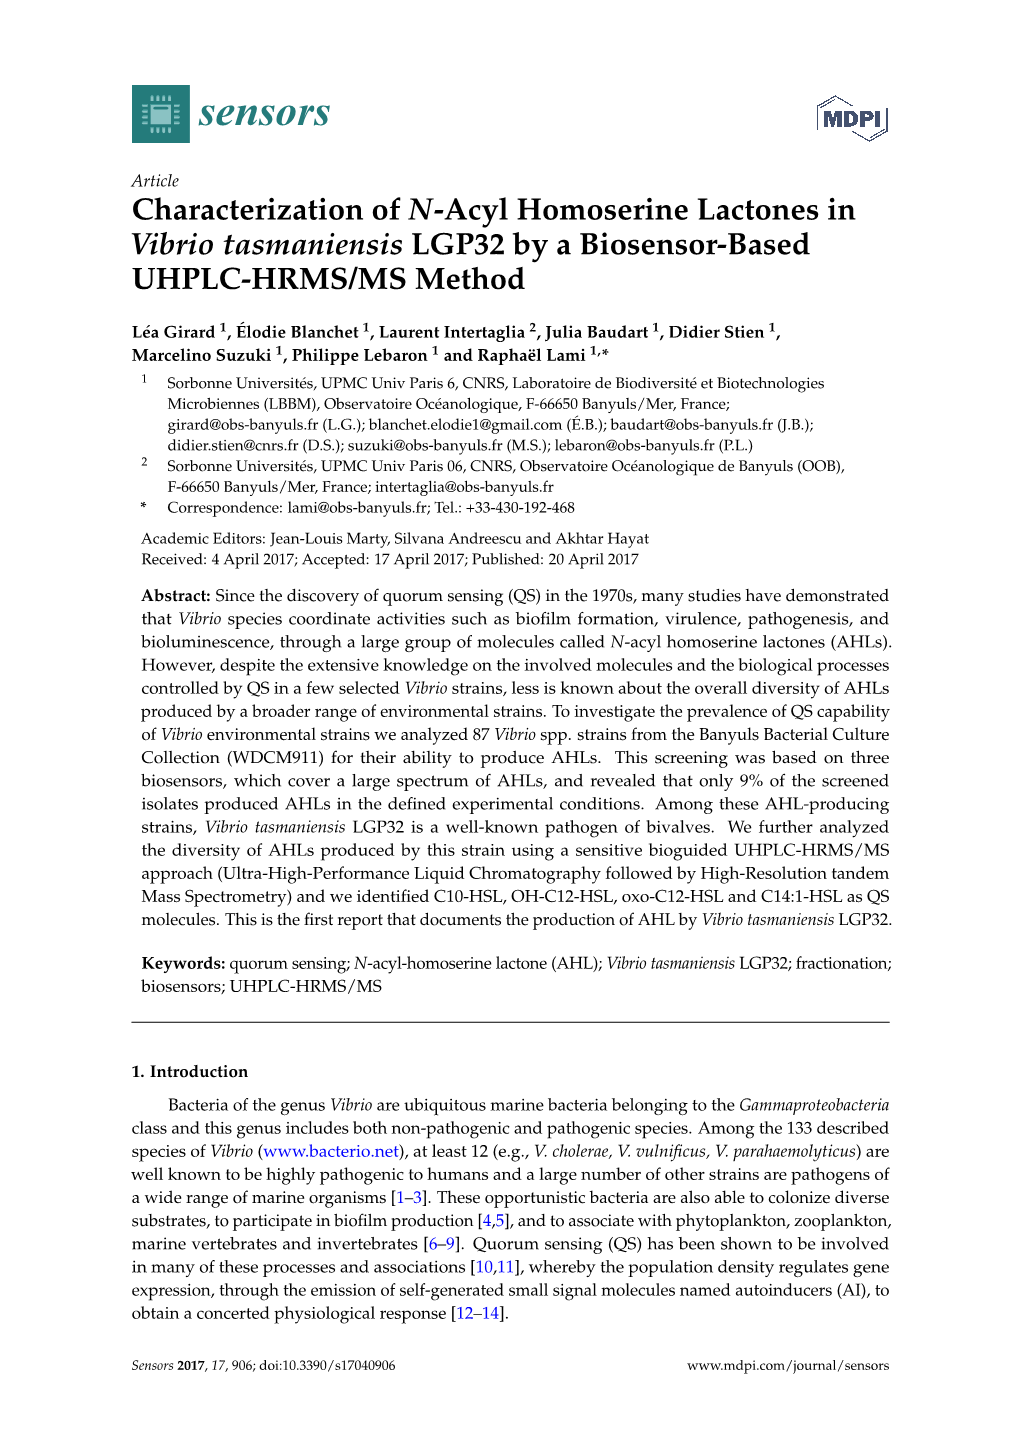 Characterization of N-Acyl Homoserine Lactones in Vibrio Tasmaniensis LGP32 by a Biosensor-Based UHPLC-HRMS/MS Method